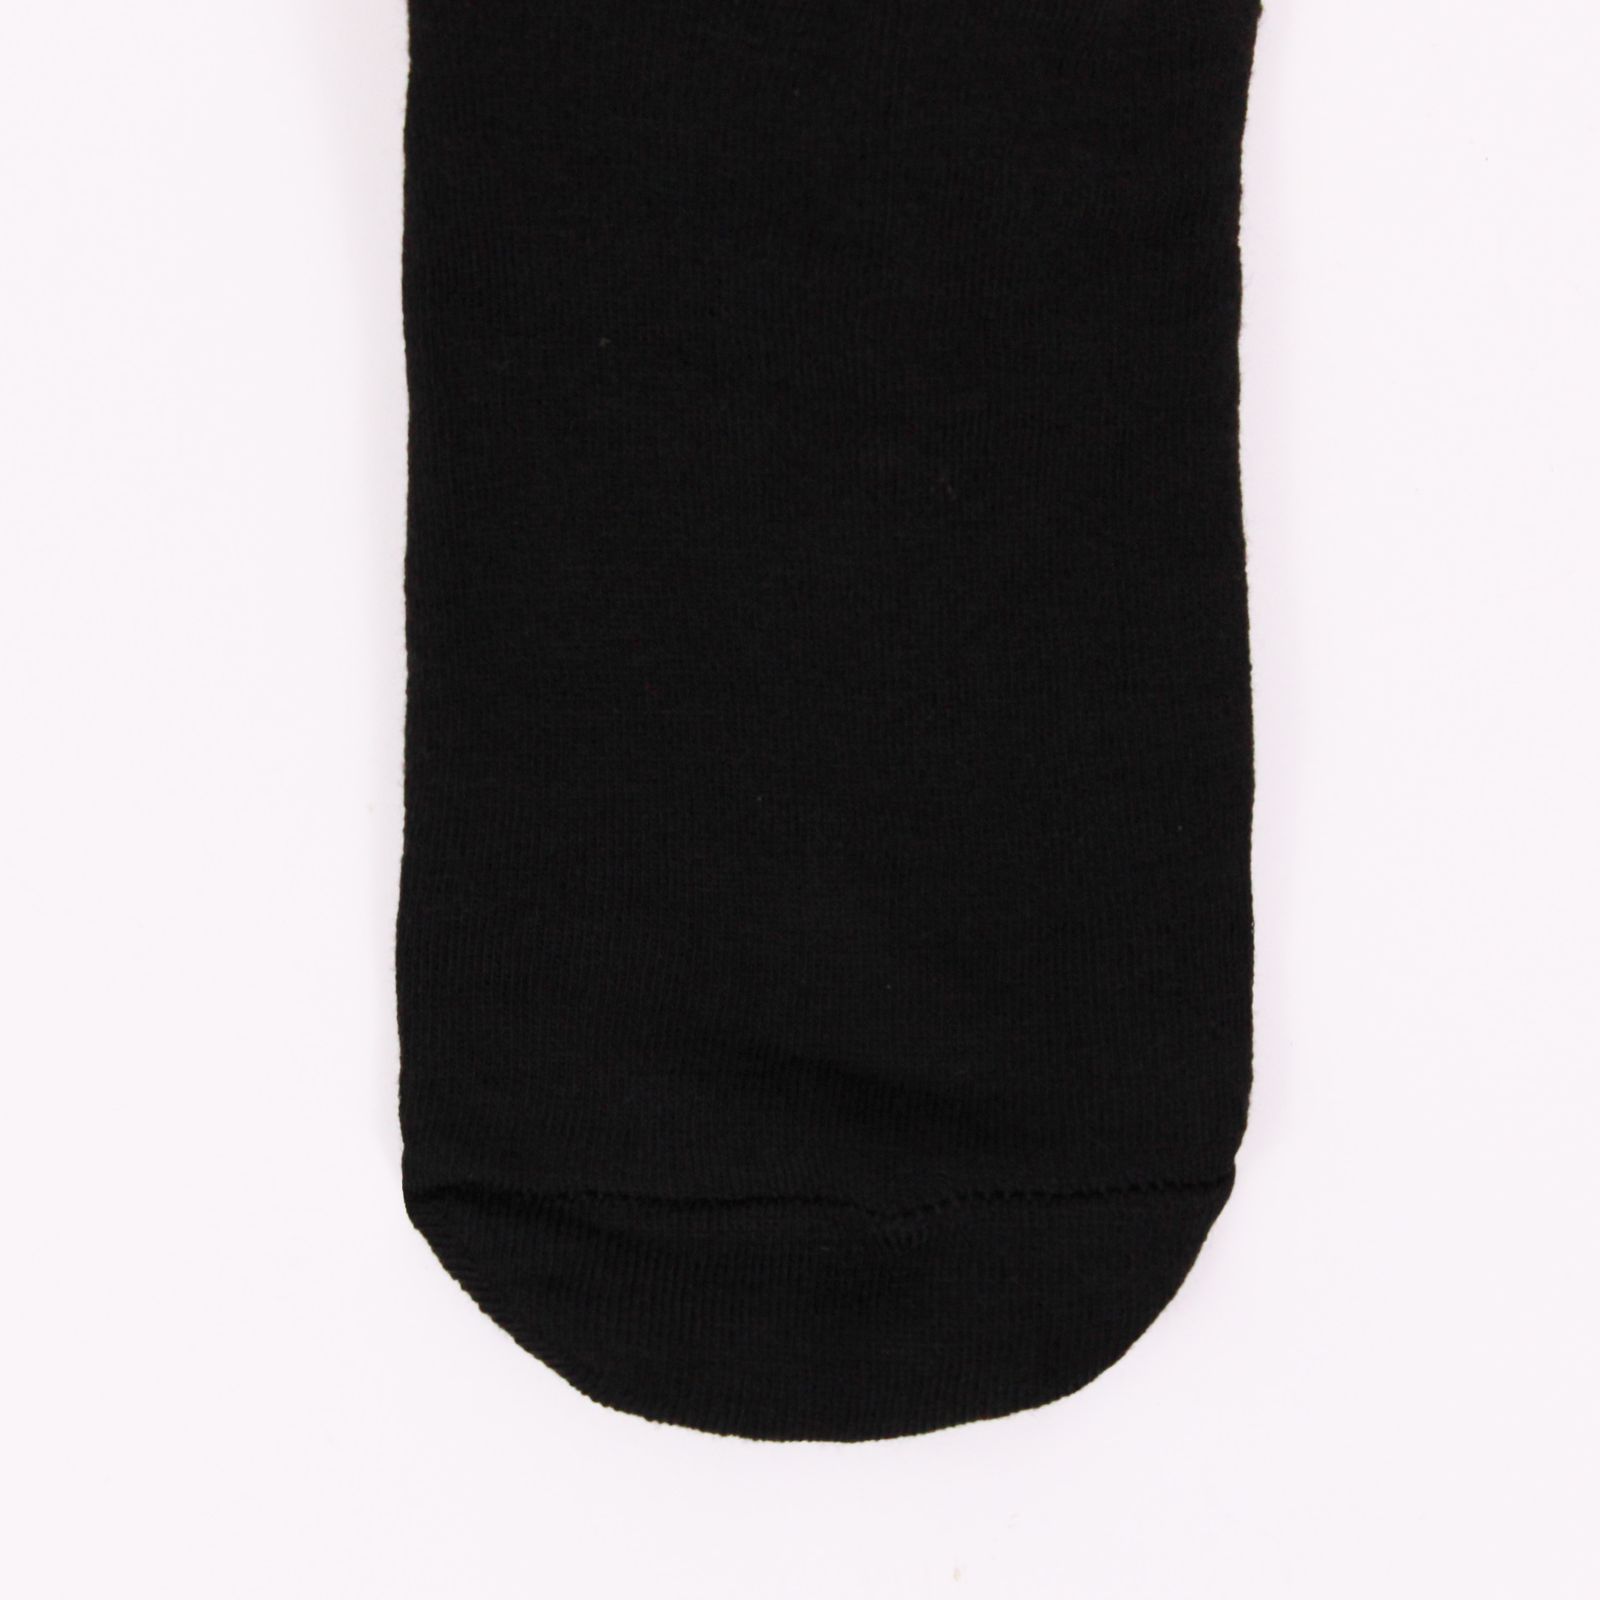 جوراب مردانه ماییلدا مدل 3633-201my  بسته 4 عددی -  - 2